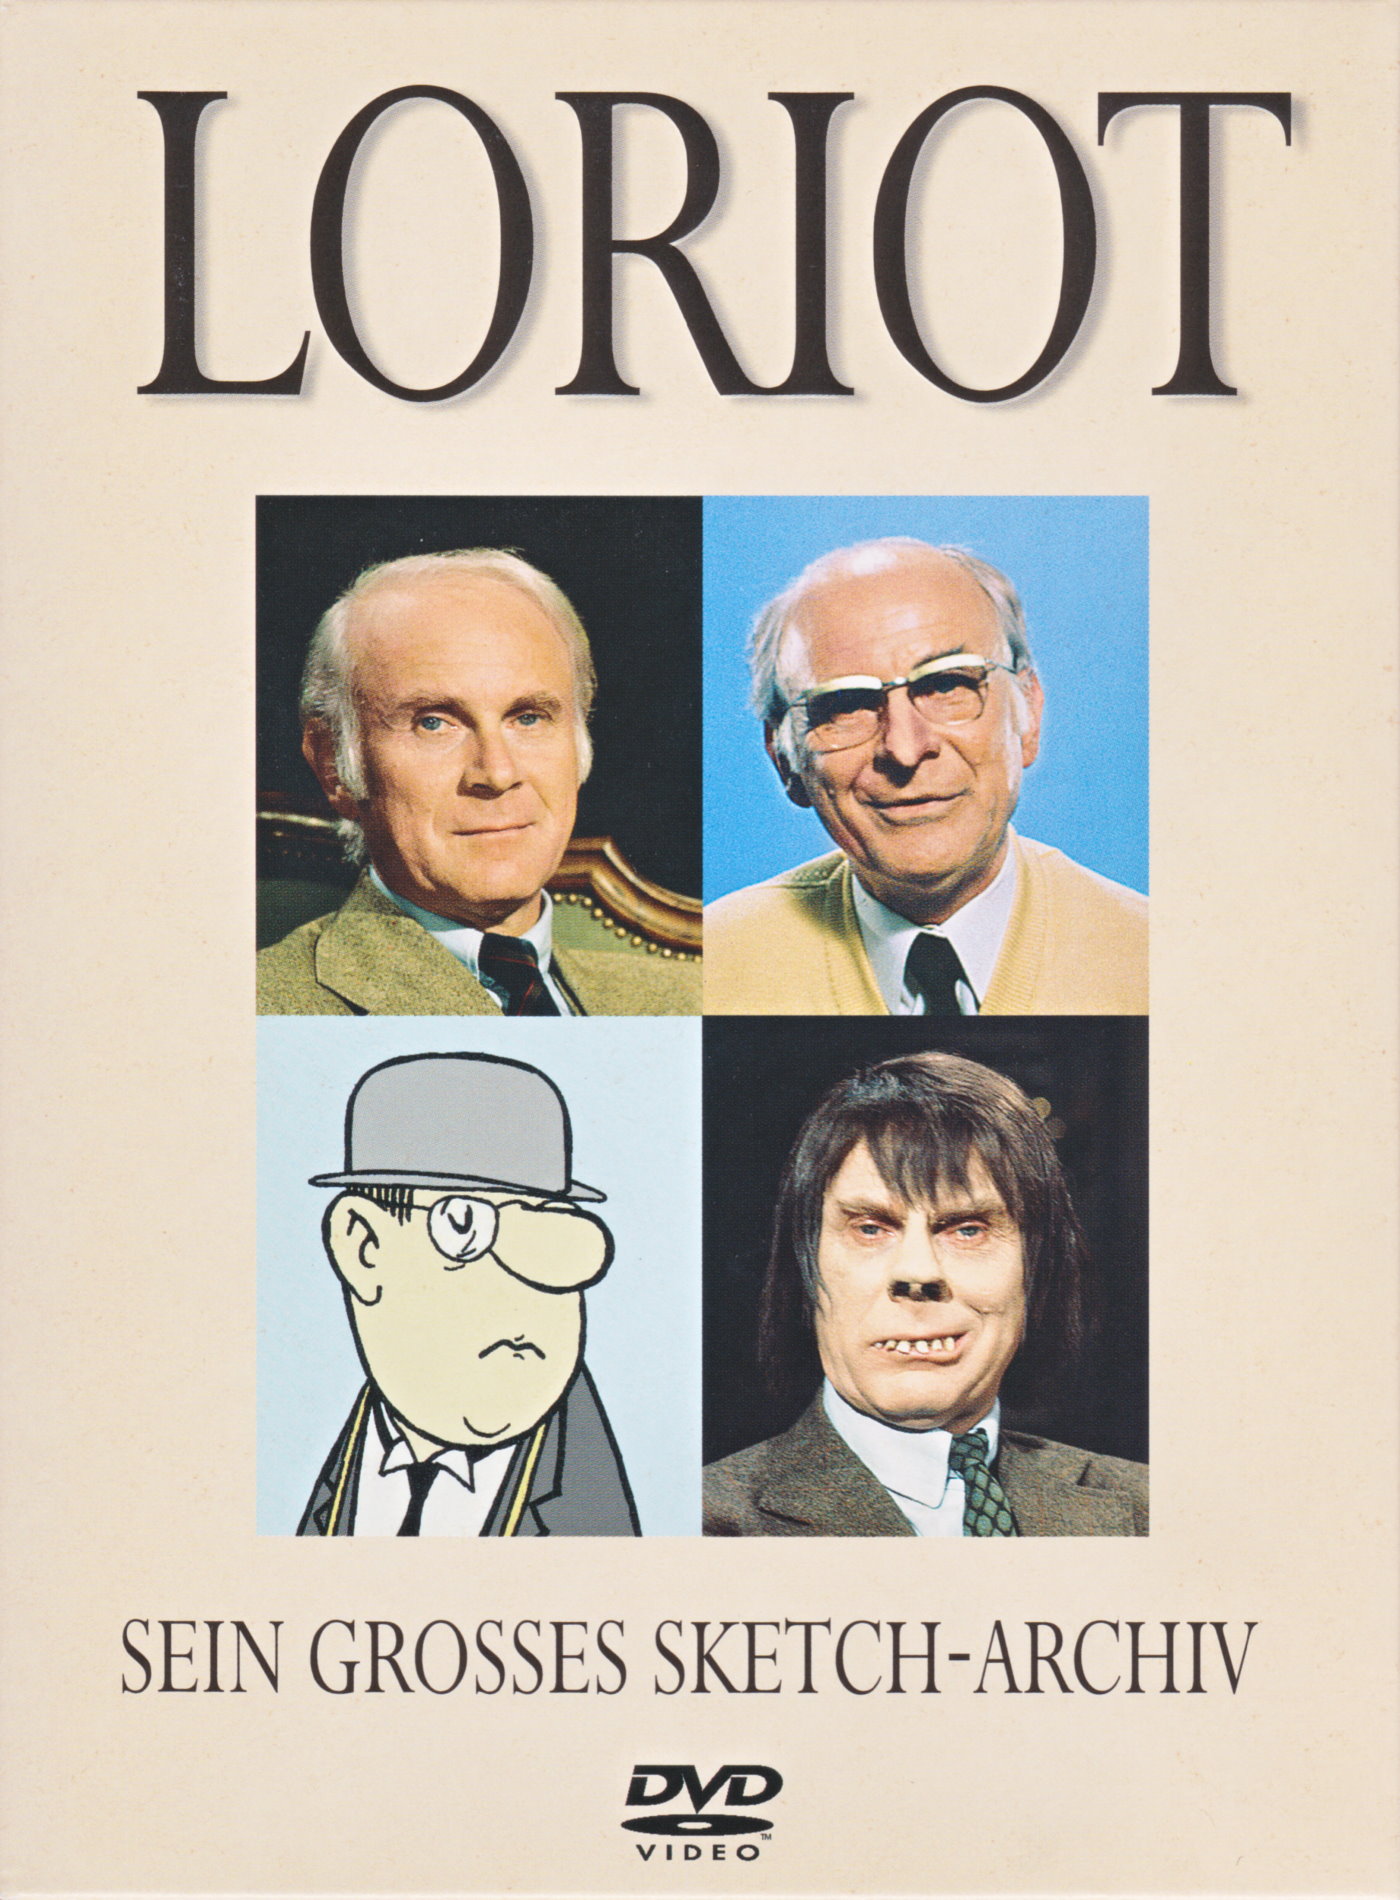 Cover - Loriot - Sein großes Sketch-Archiv.jpg